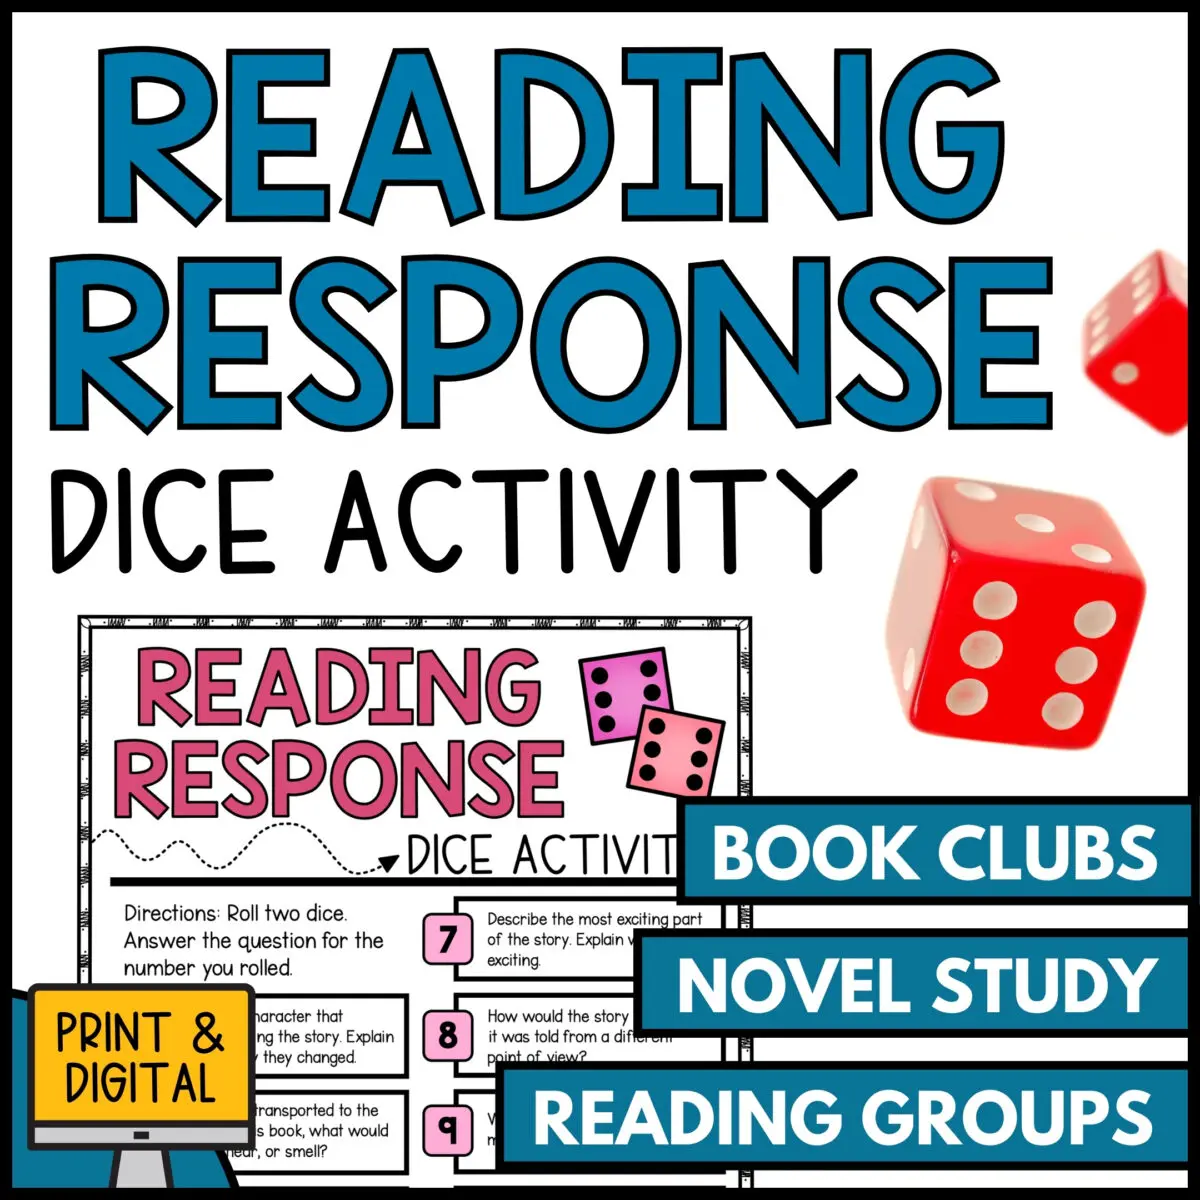 Reading Response Dice Activity